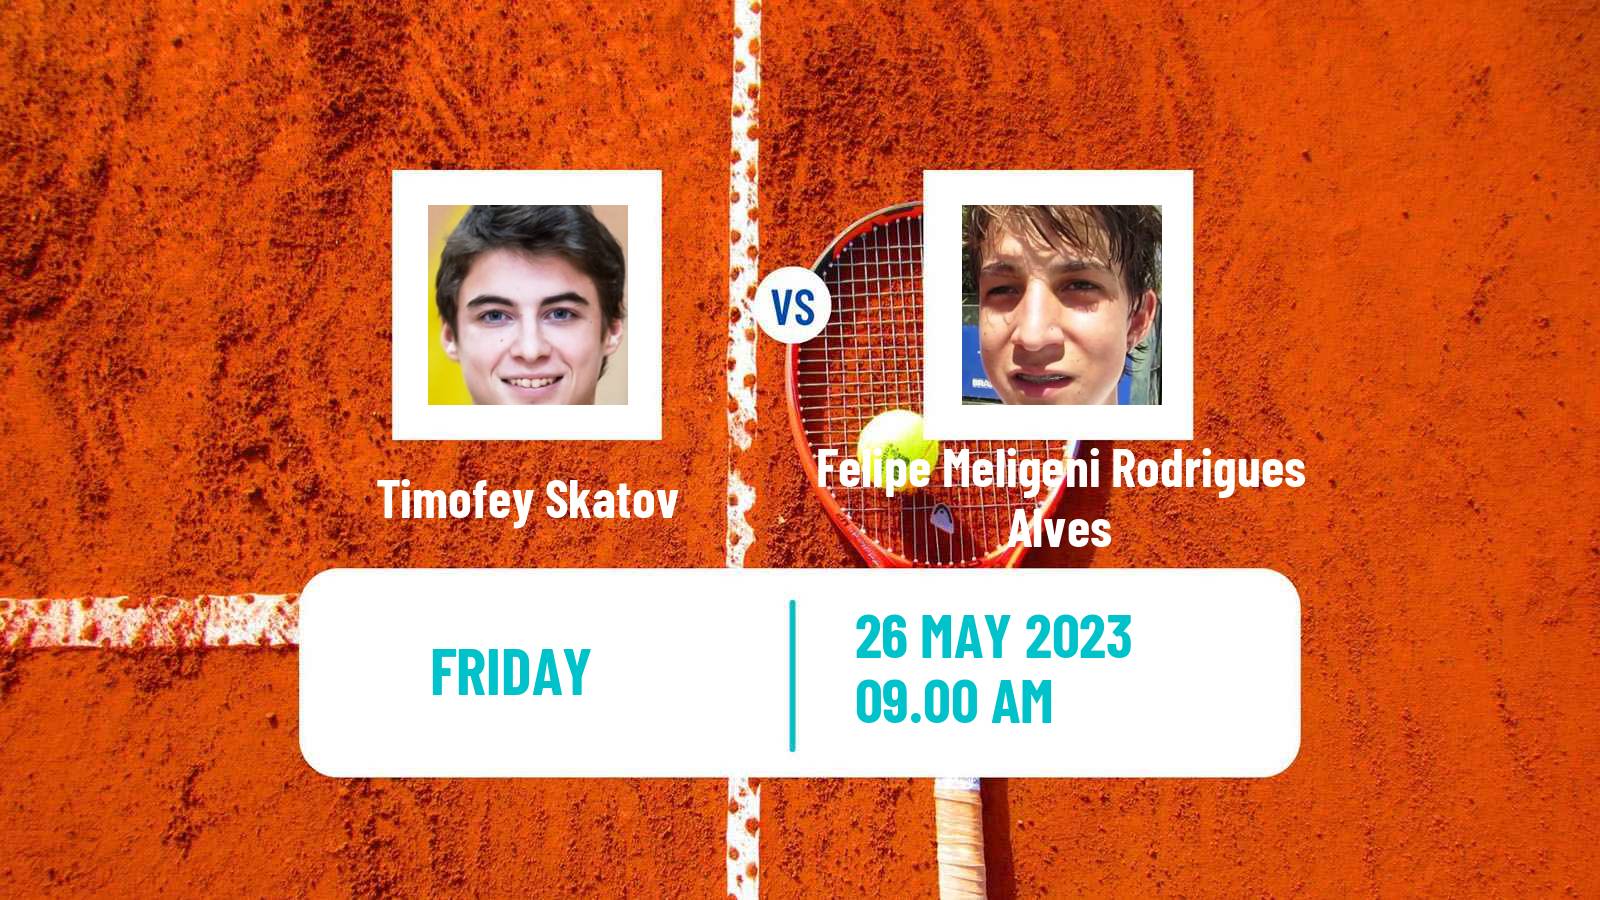 Tennis ATP Roland Garros Timofey Skatov - Felipe Meligeni Rodrigues Alves